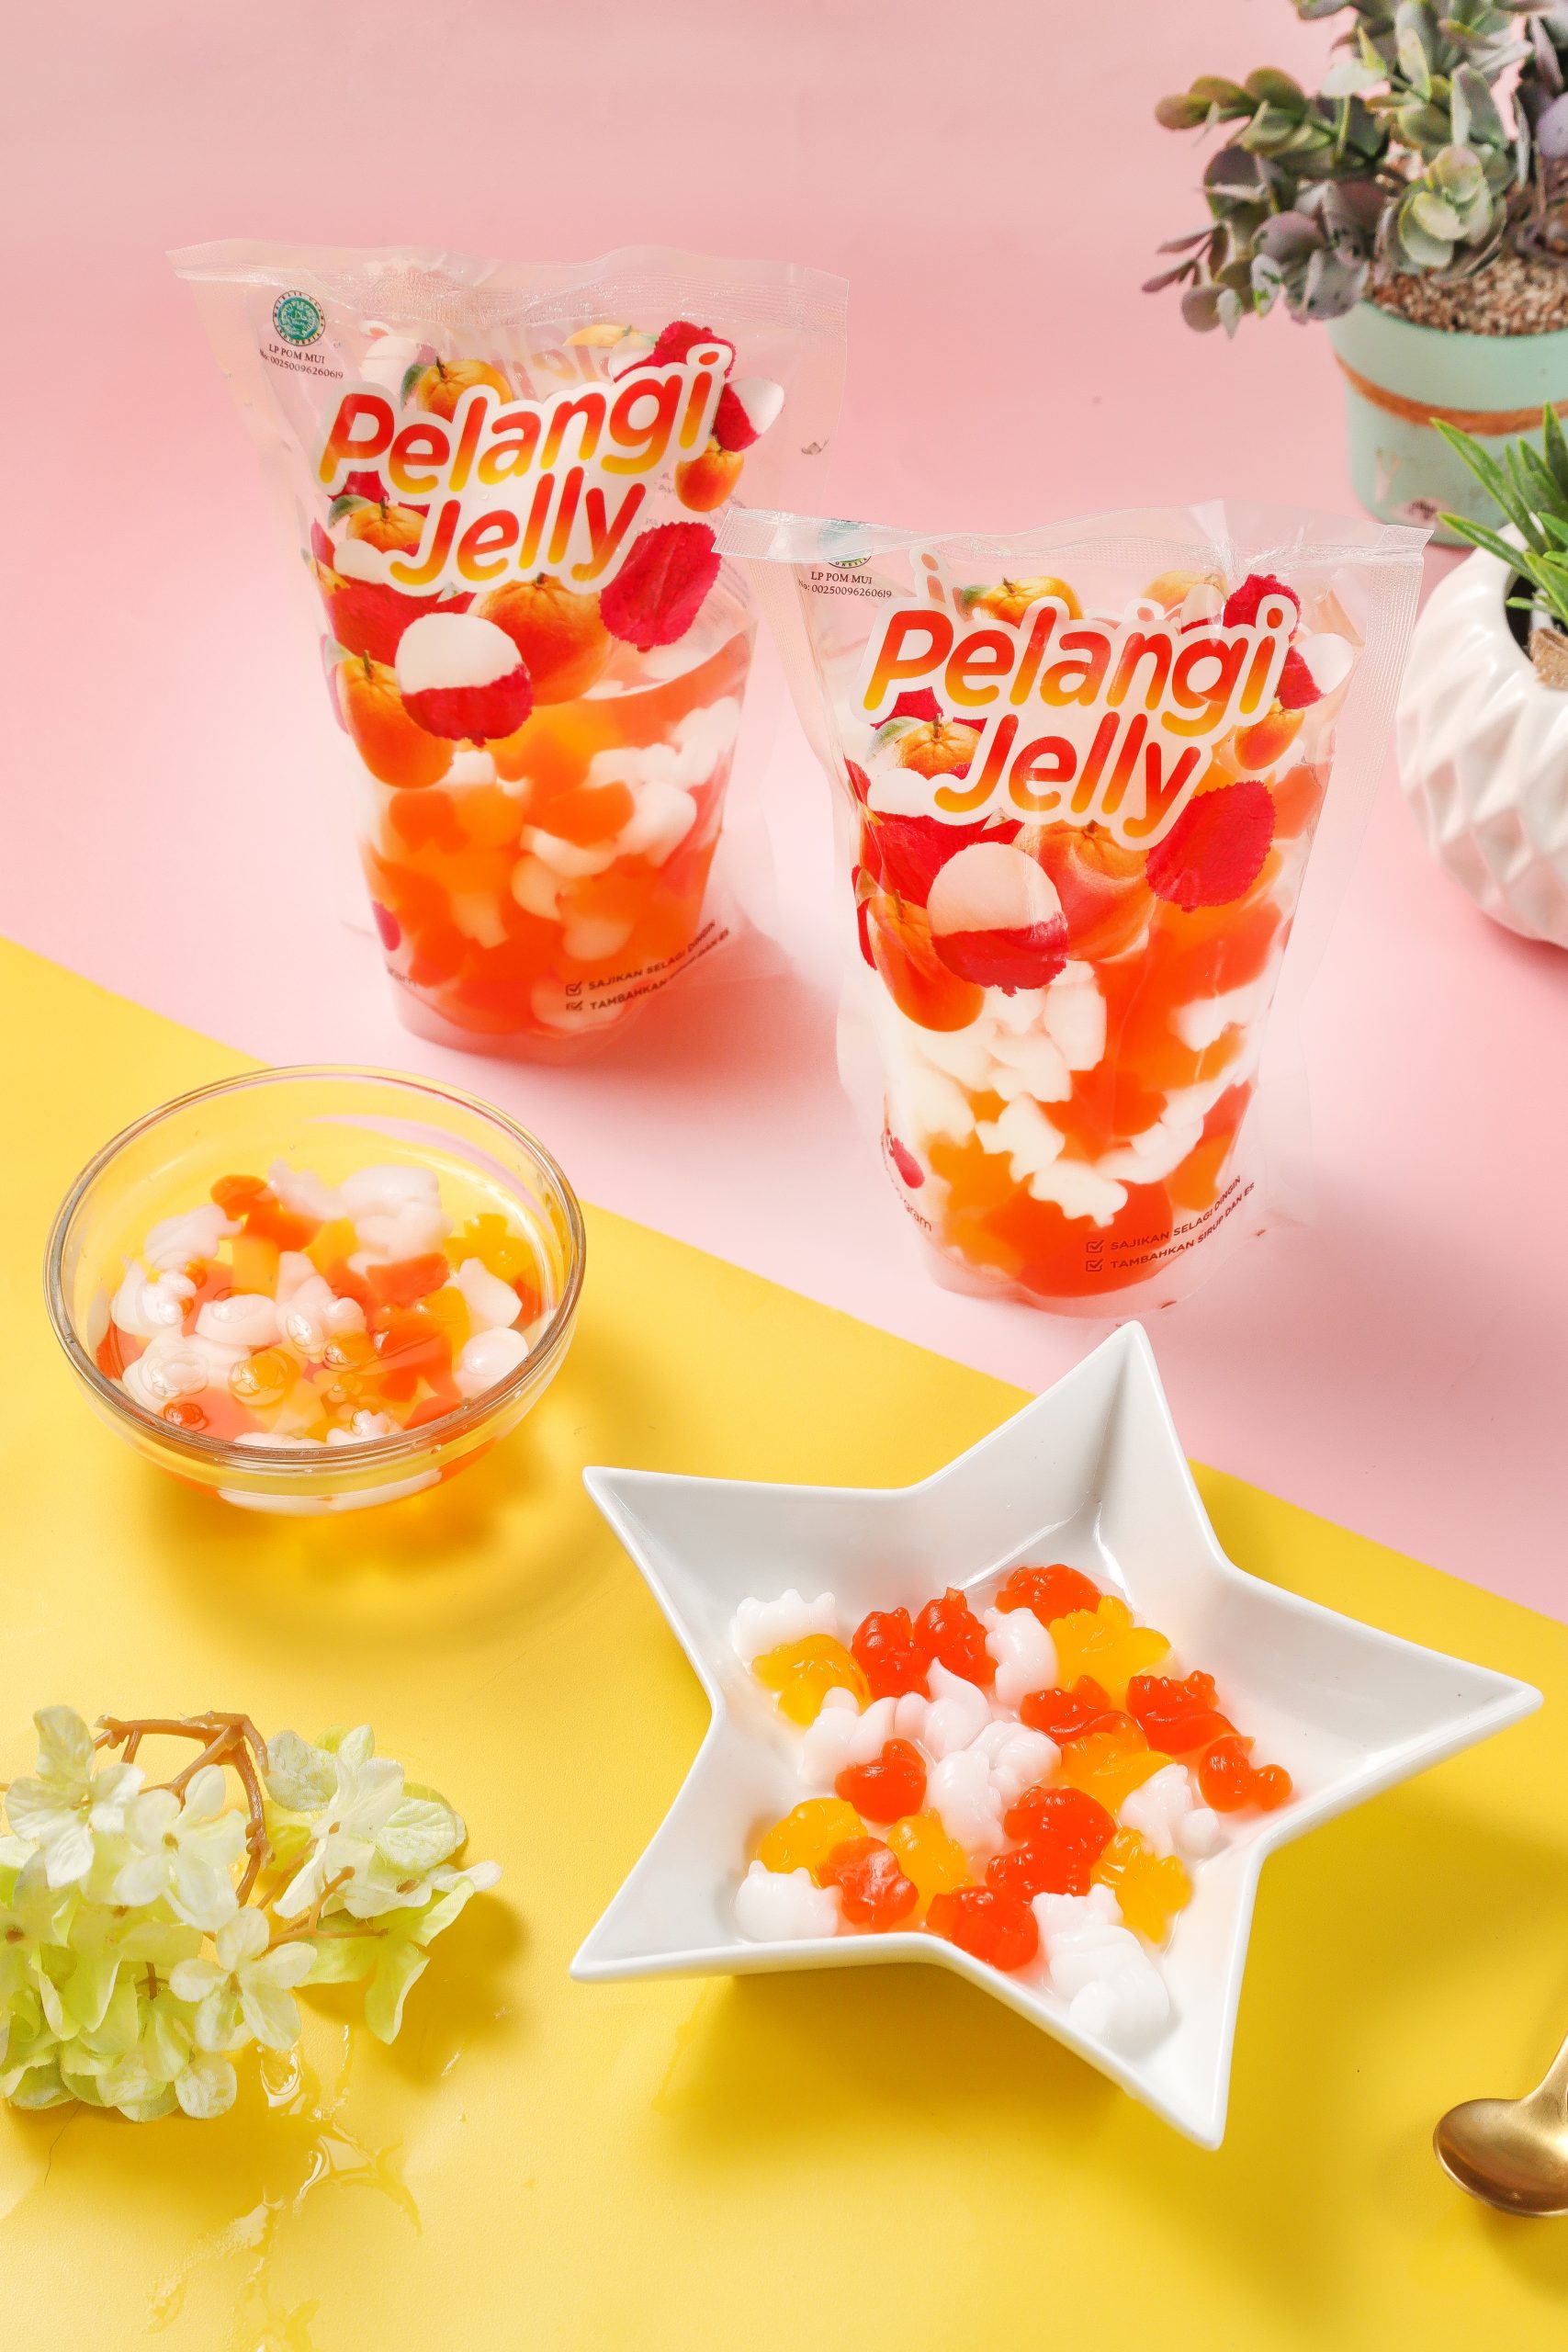 Pelangi Jelly